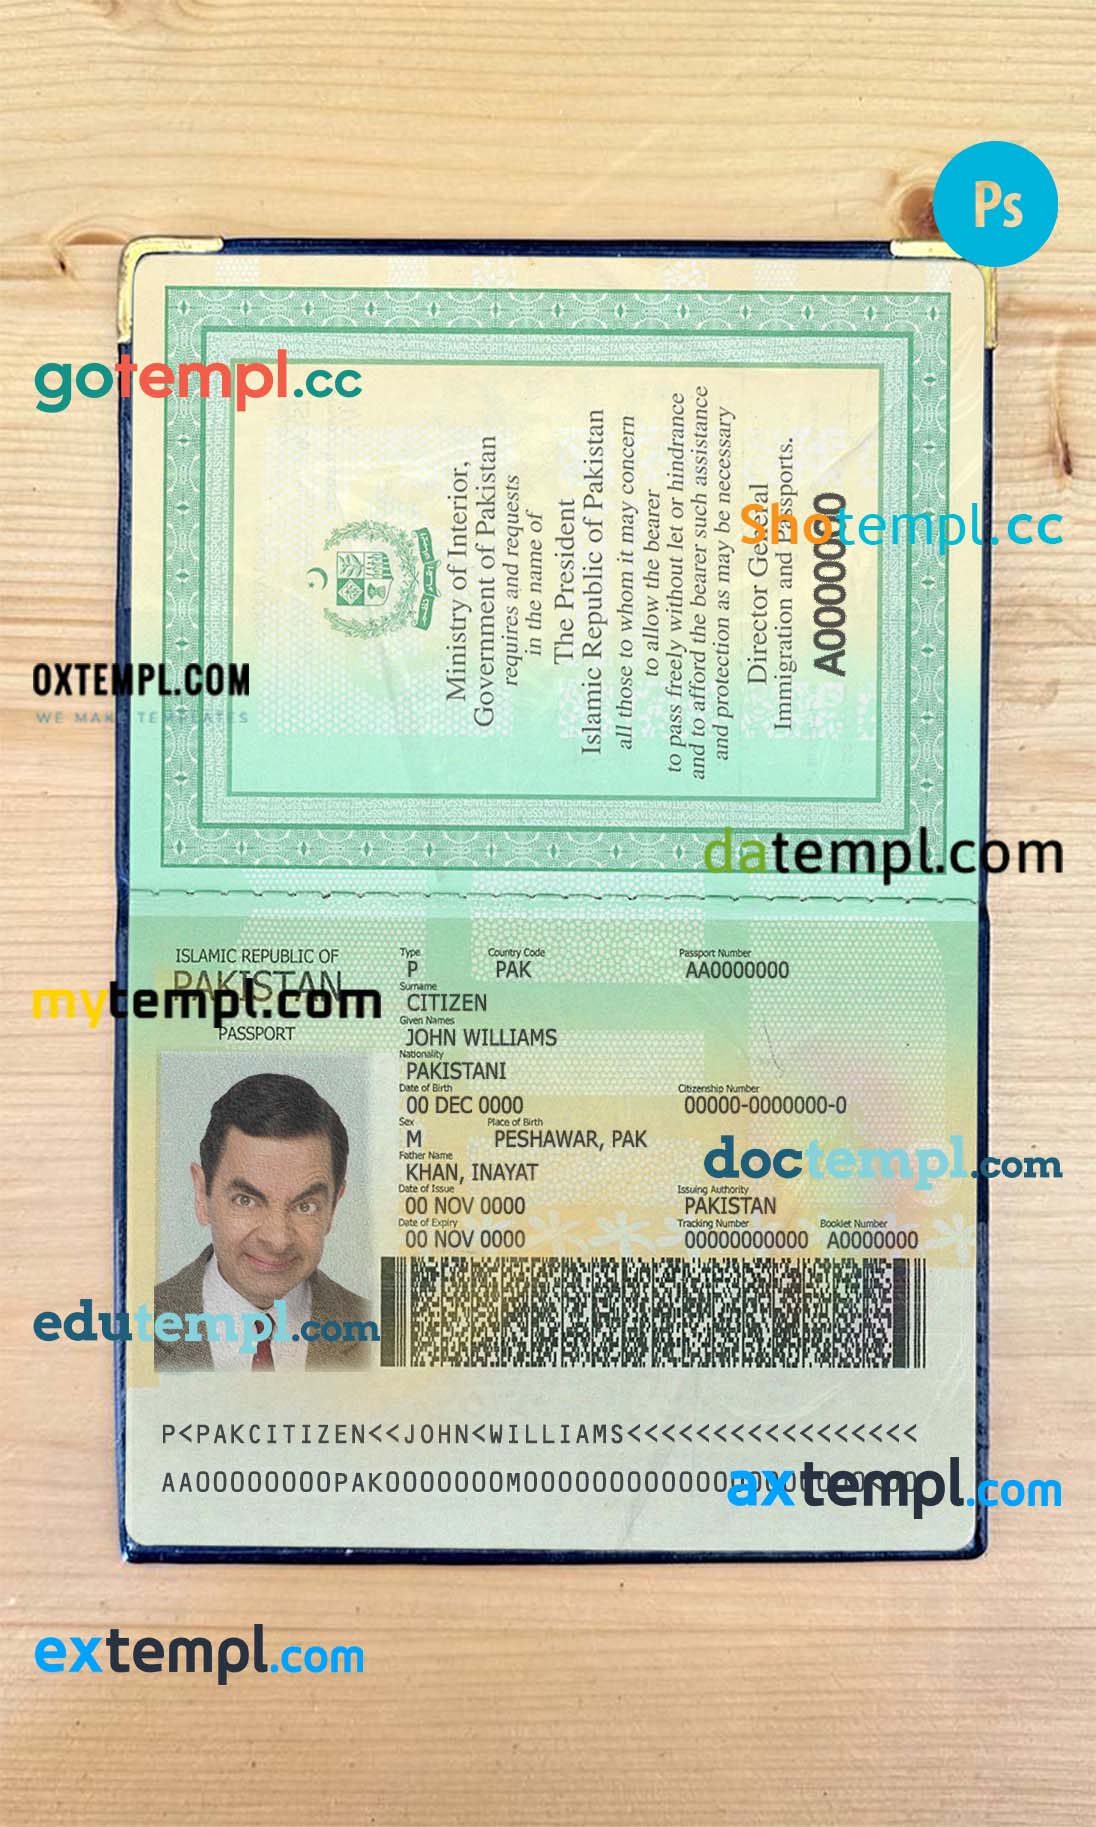 Australia Aveo bank mastercard debit card template in PSD format, fully editable